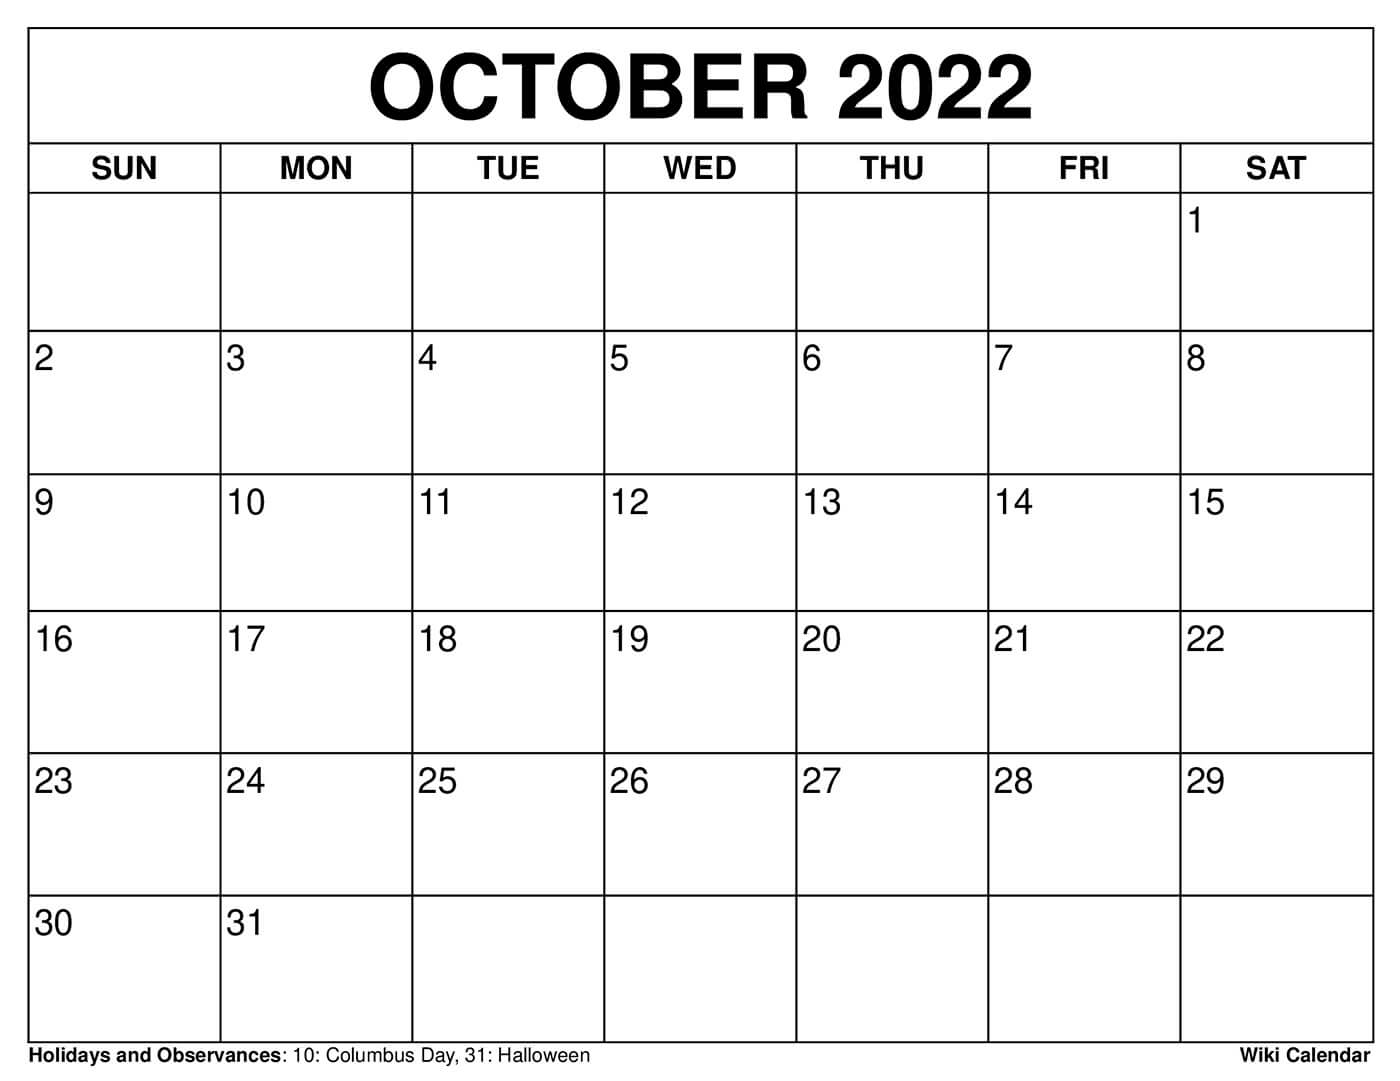 Free Printable October 2022 Calendar Template Free Printable October 2022 Calendars - Wiki Calendar